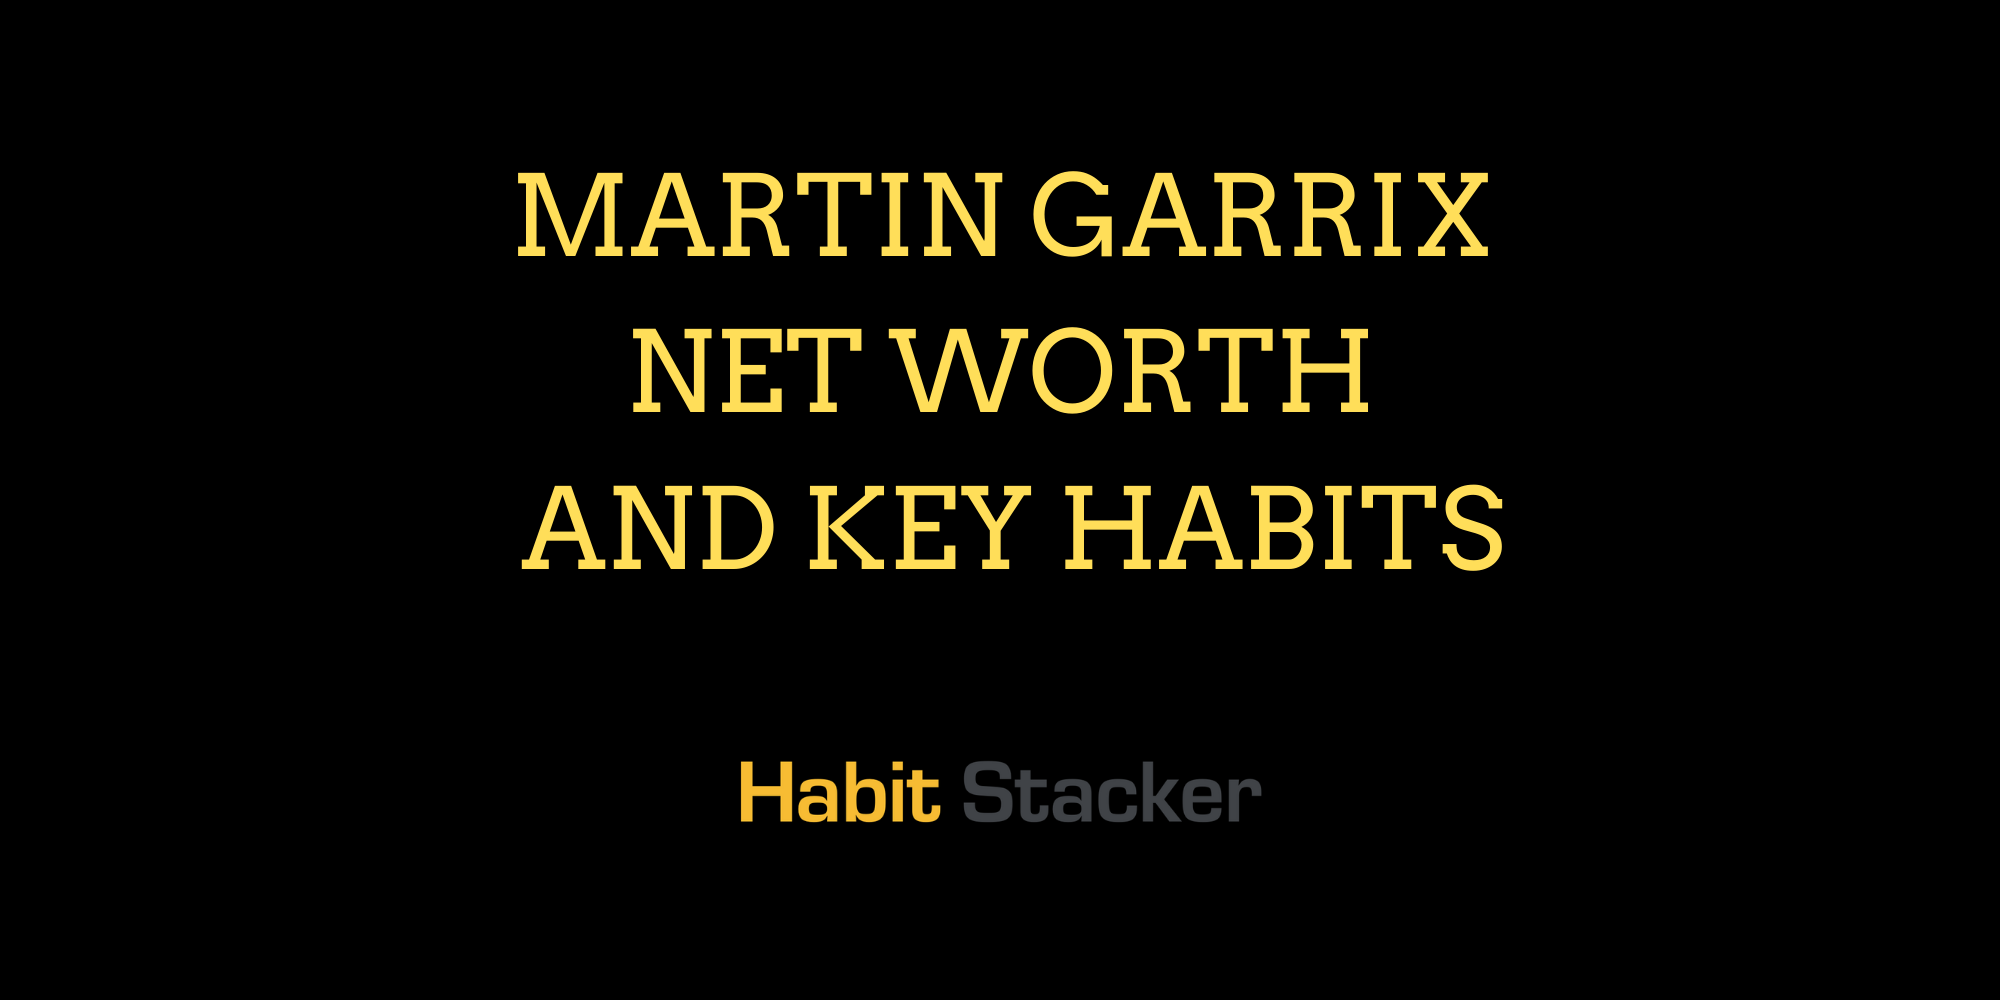 Martin Garrix Net Worth and Key Habits